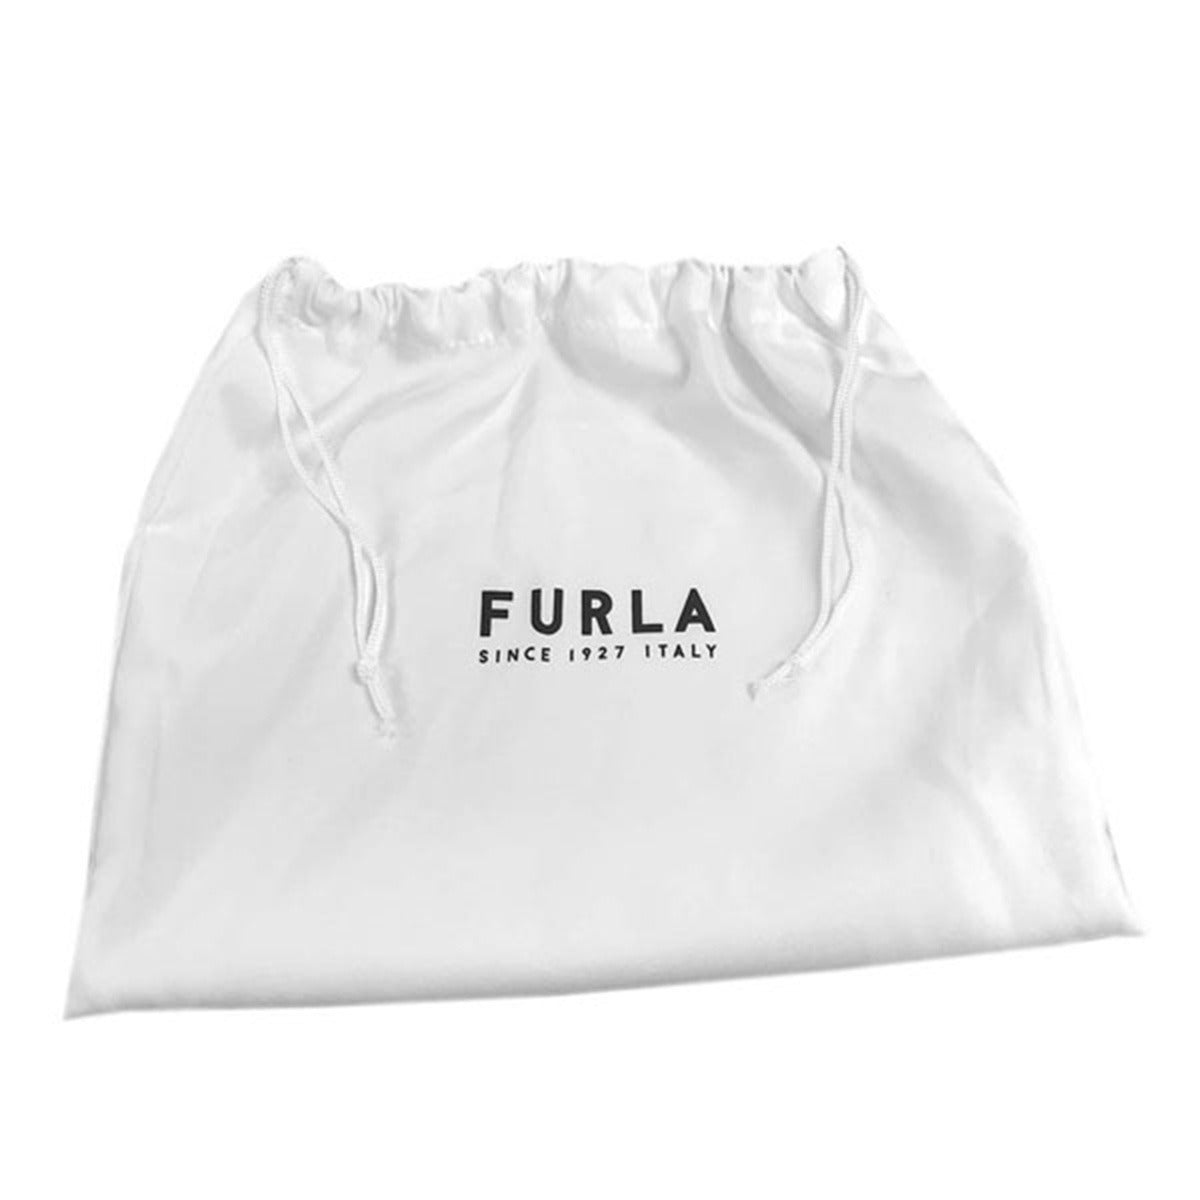 Furla フルラ FURLA OPPORTUNITY WB00299 トートバッグ TONI HAVANA ブラウン系 レディース